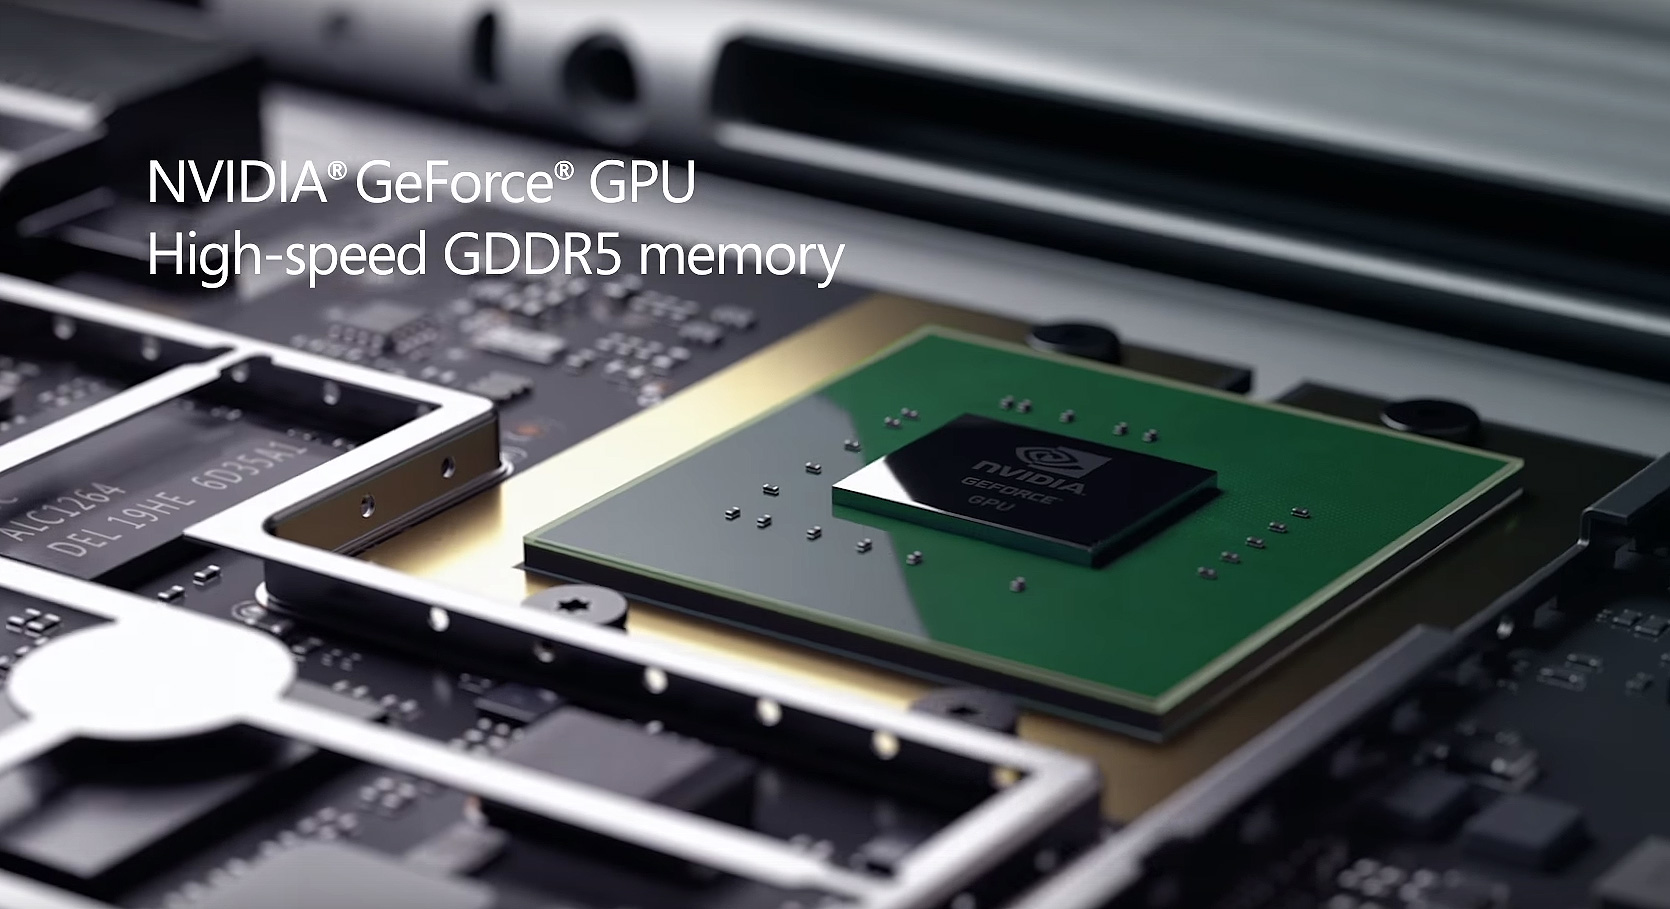 NVIDIA GeForce GTX 670MX SLI 